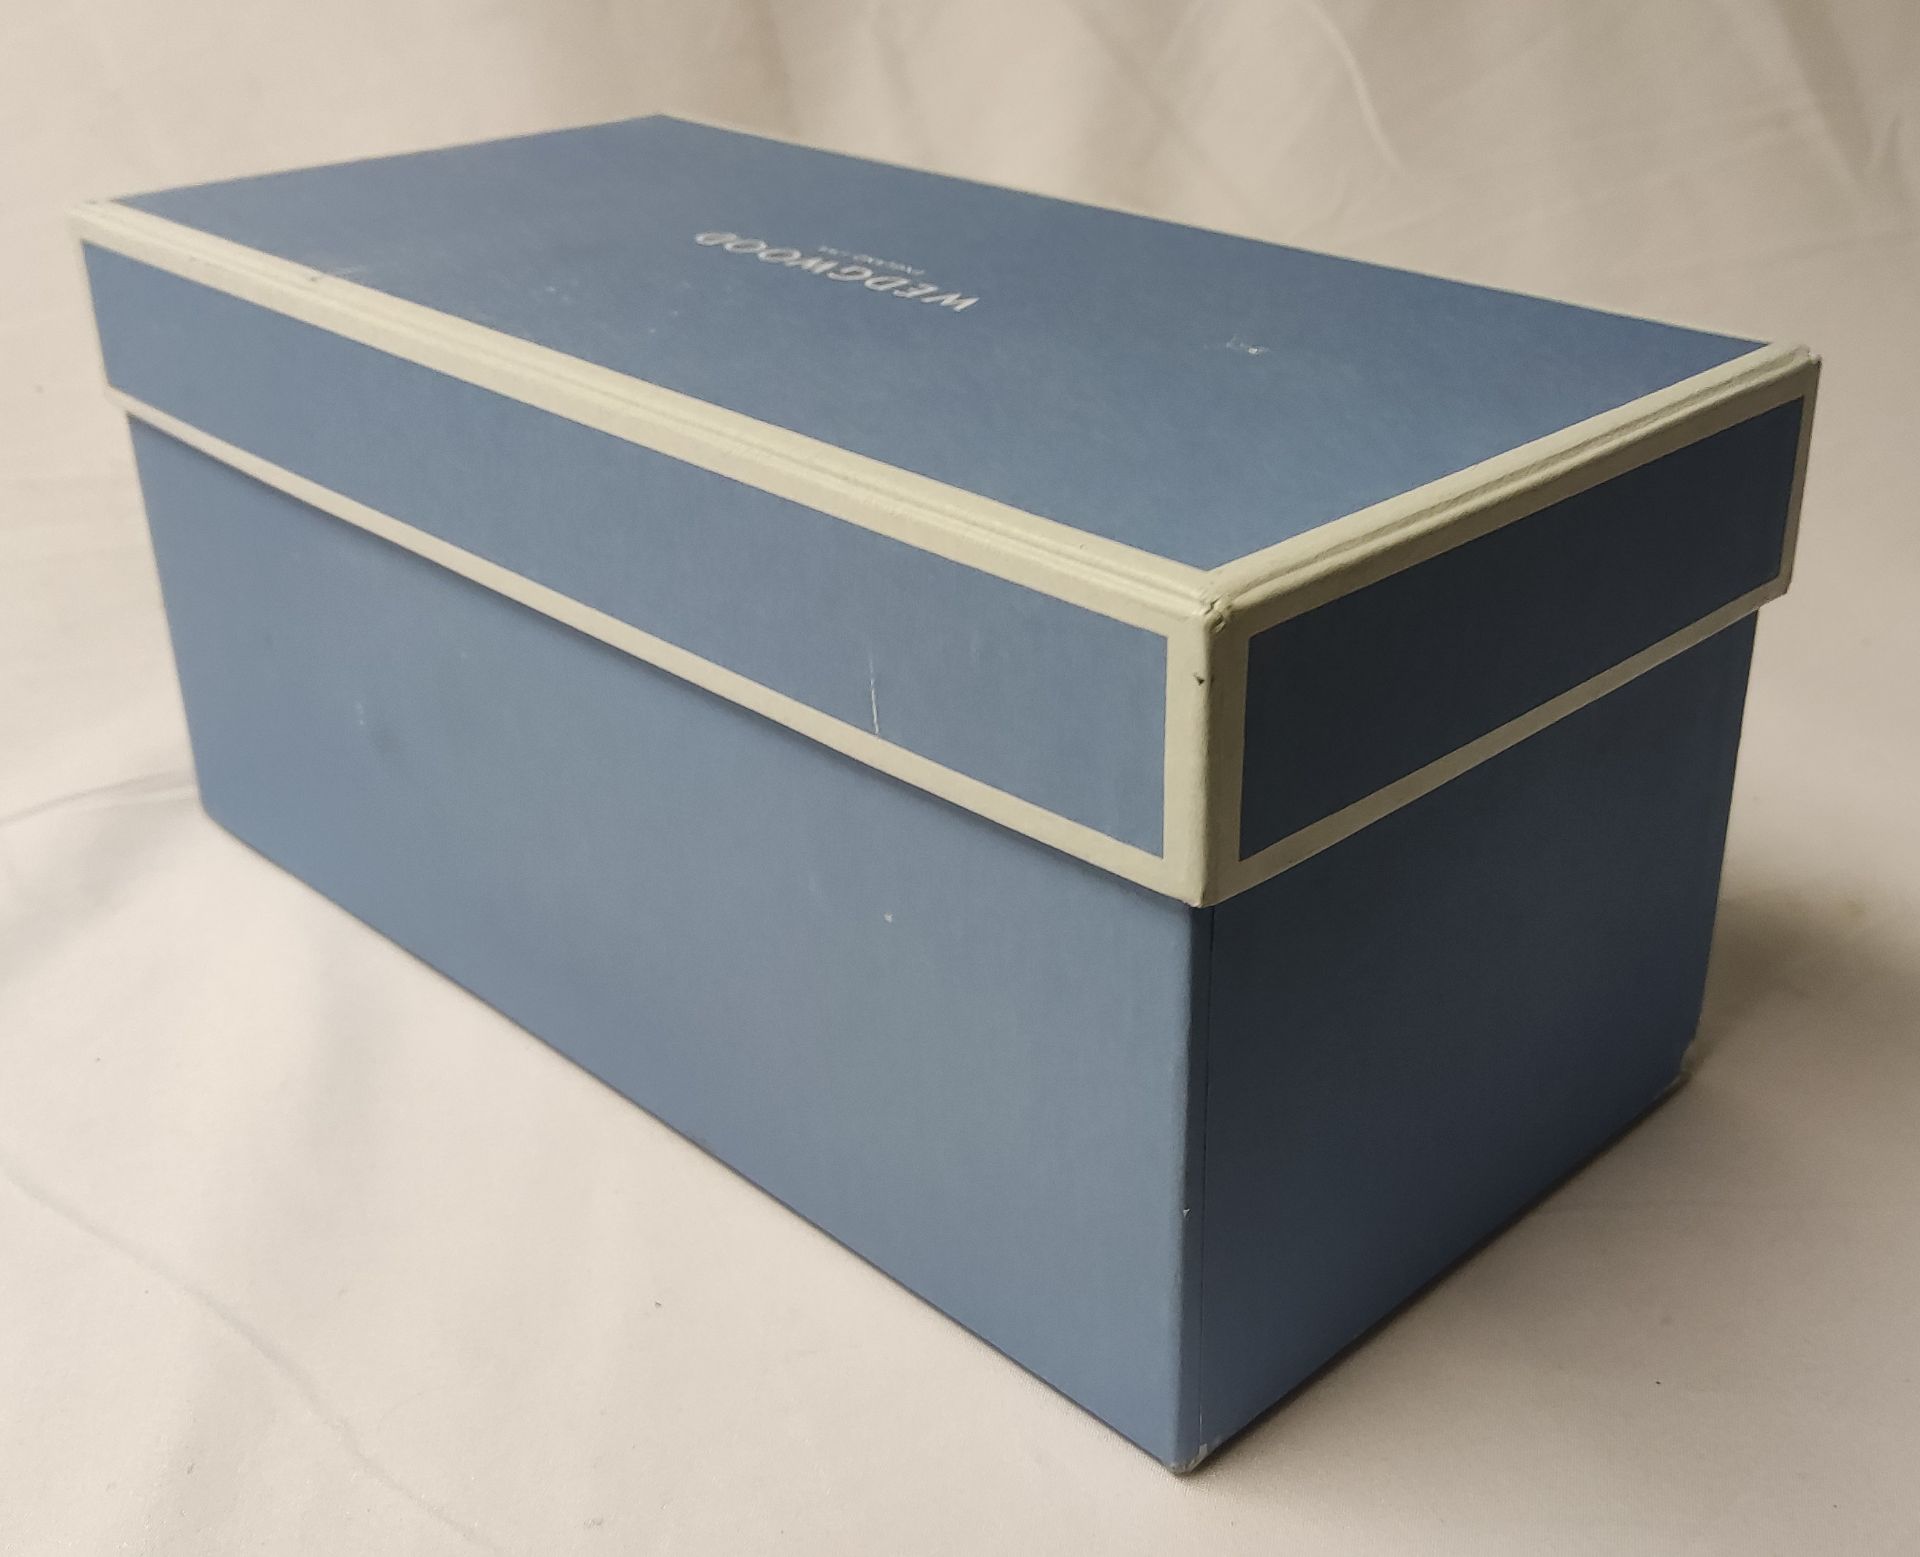 1 x WEDGWOOD Wonderlust Waterlily Fine Bone China Sugar & Creamer Set - New/Boxed - RRP £80 - - Image 5 of 22